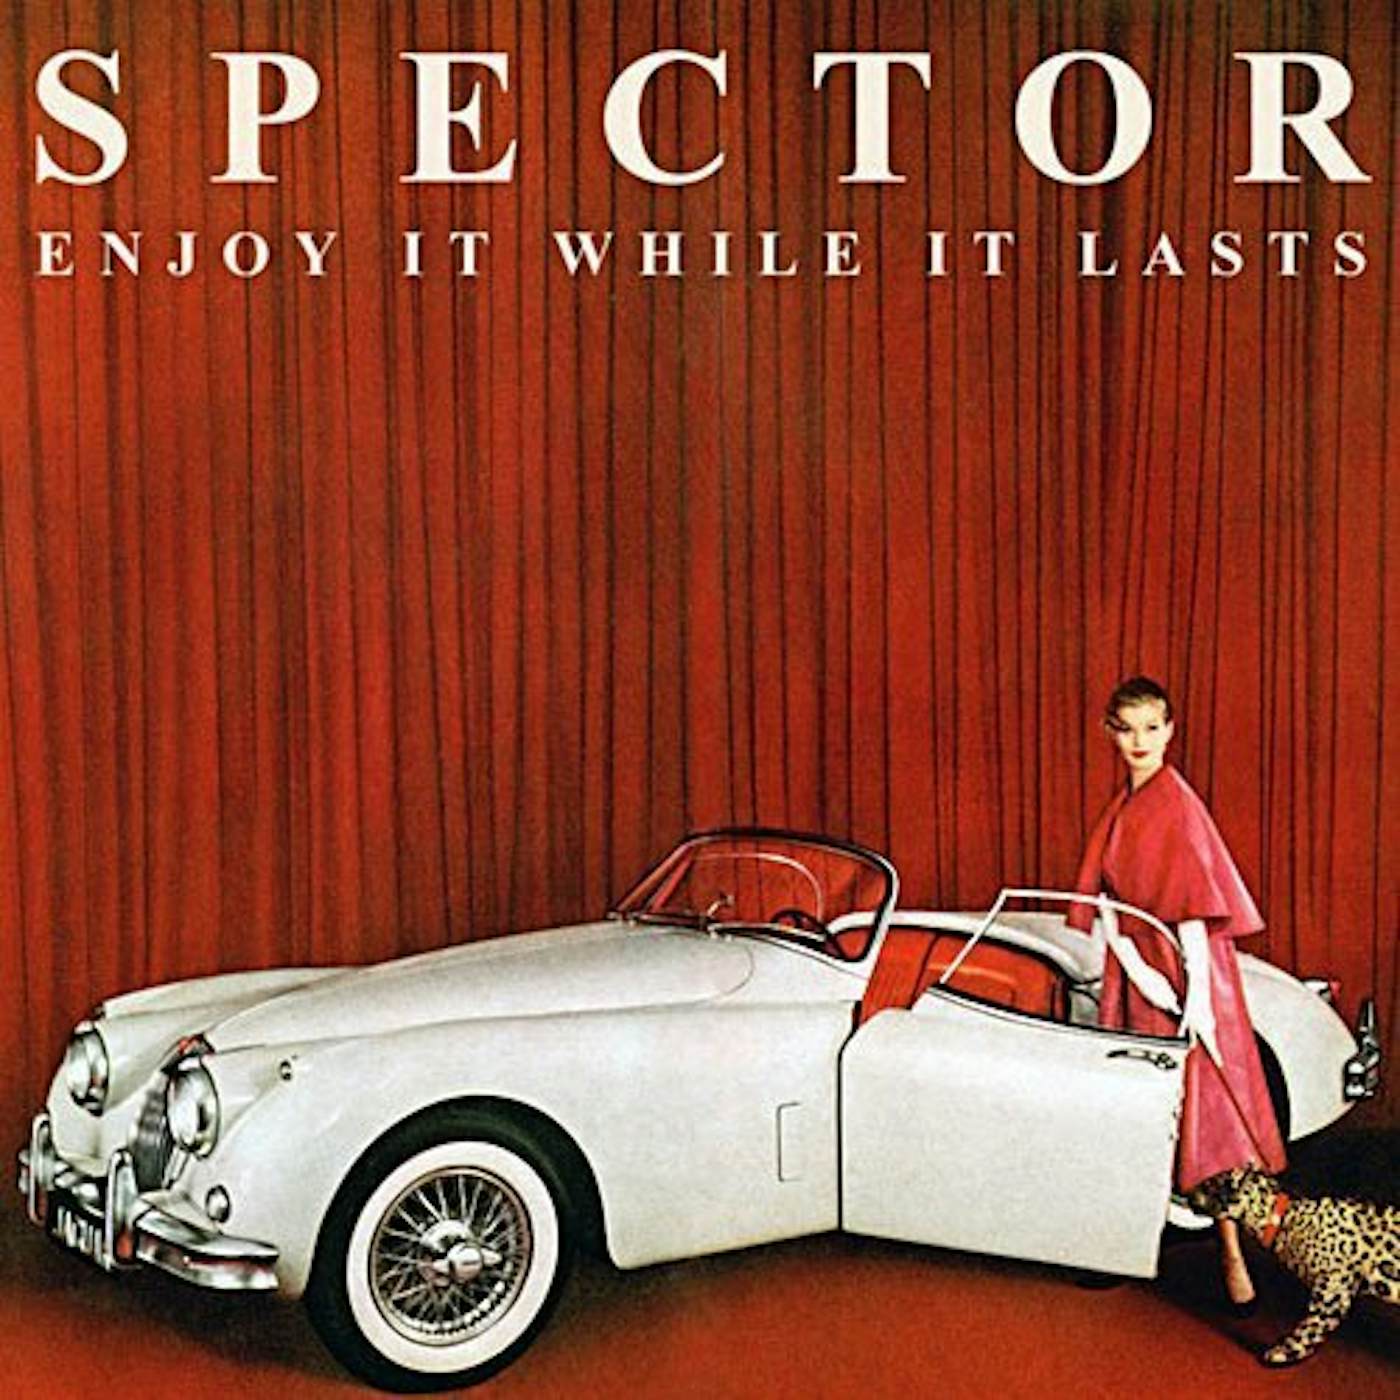 Spector Enjoy It While It Lasts Vinyl Record